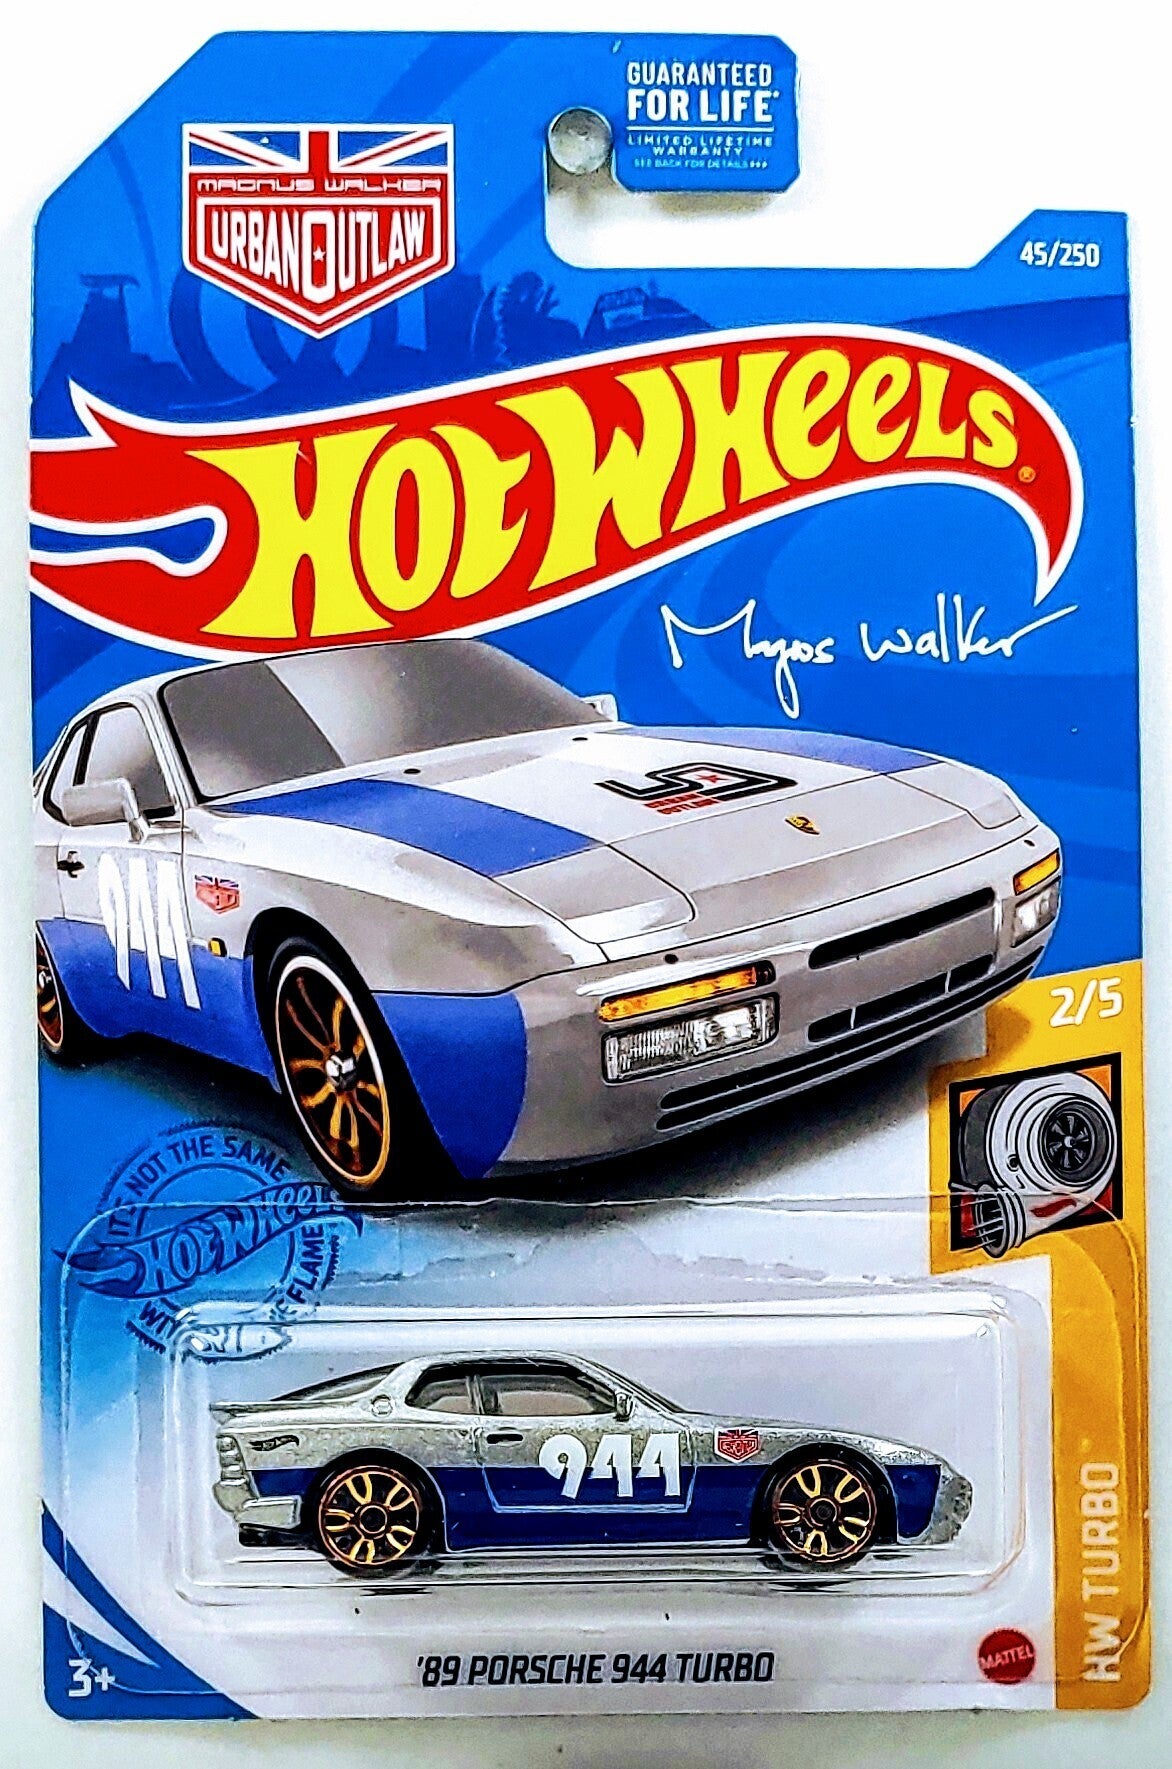 Hot Wheels 2021 - Collector # 045/250 - HW Turbo 2/5 - '89 Porsche 944 Turbo - Silver / Urban Outlaw - USA Card with Magnus Walker Logo